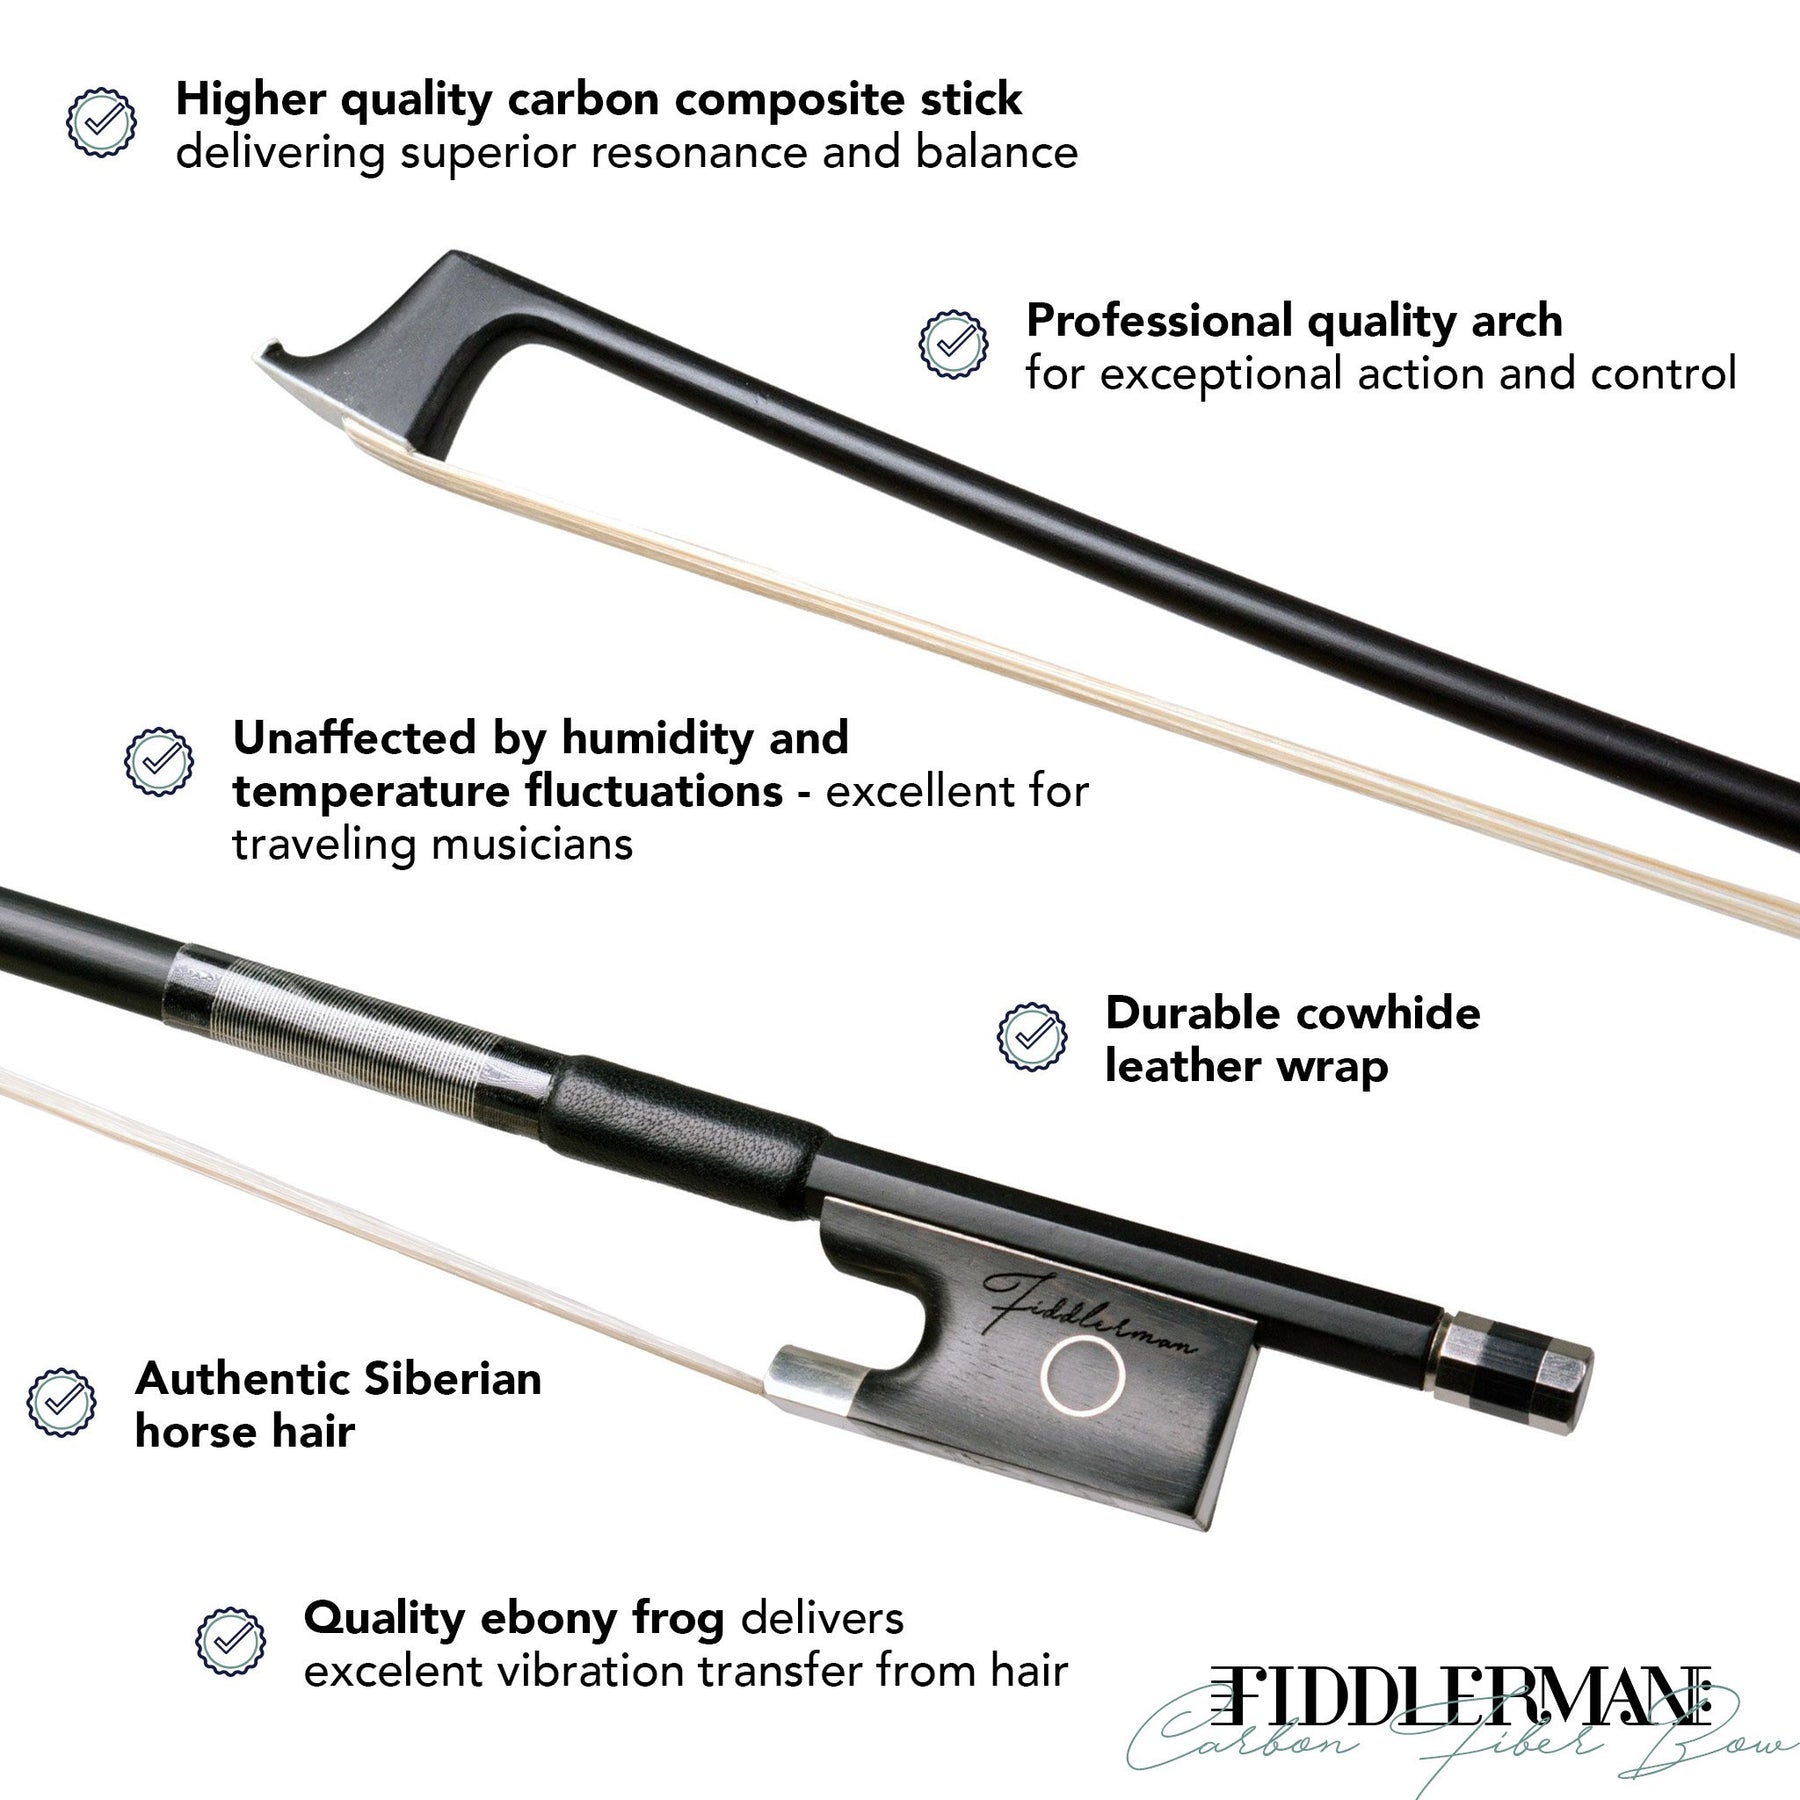 B-Stock Fiddlerman Carbon Fiber Violin Bow